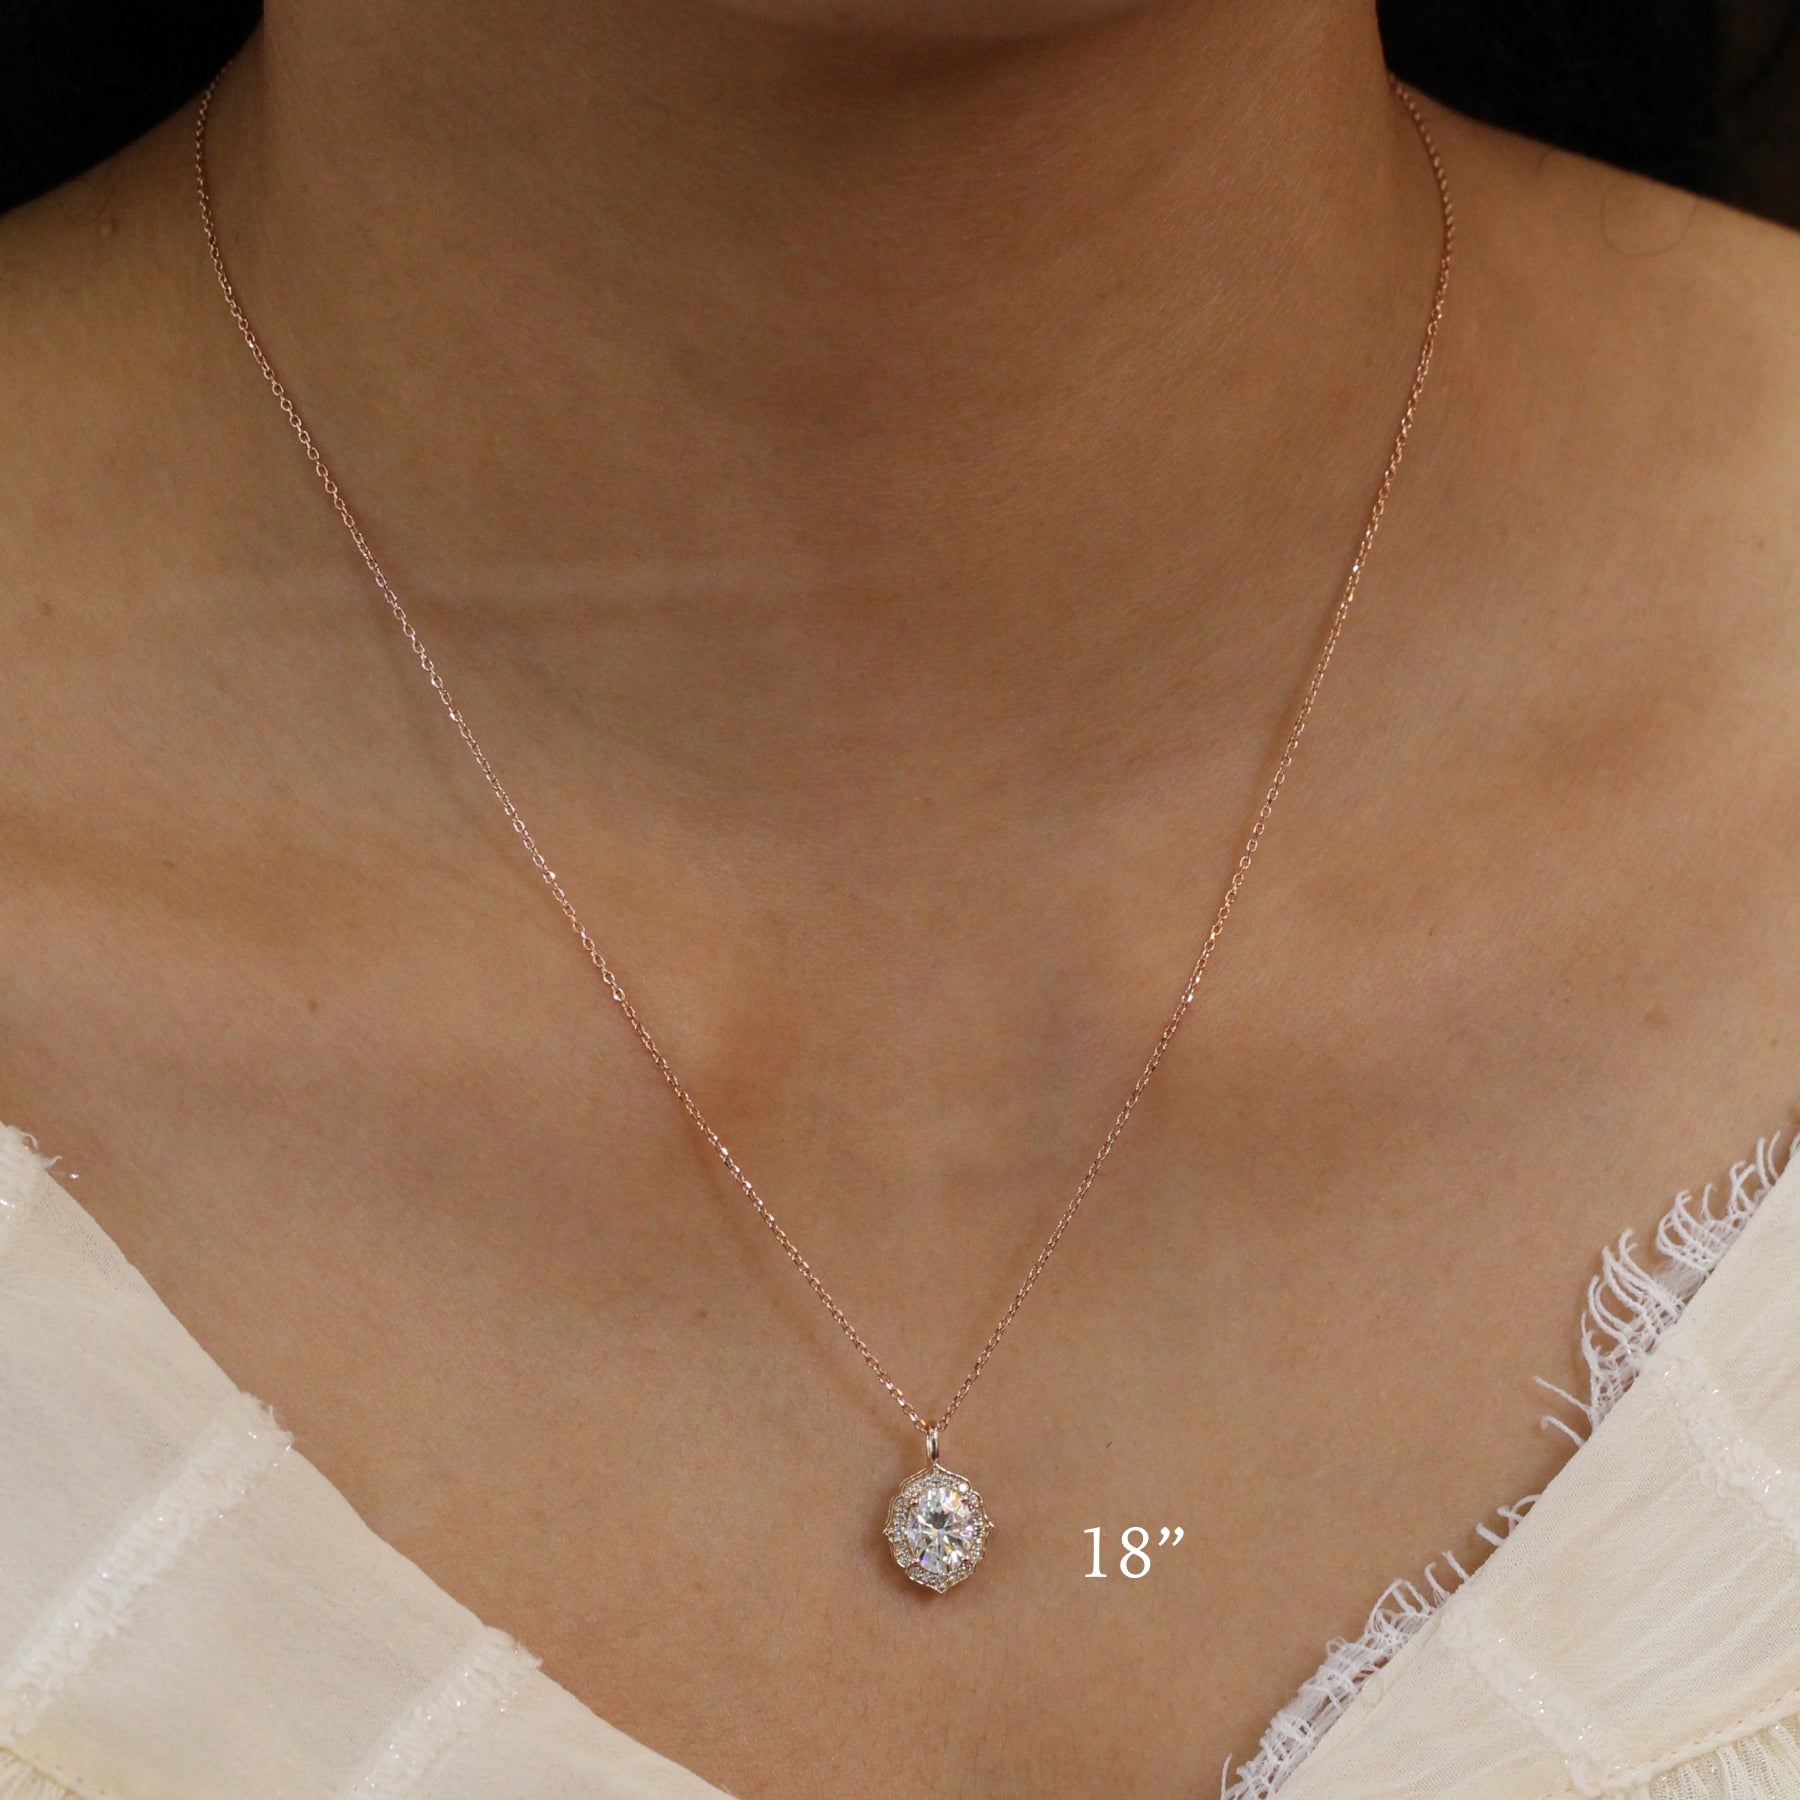 vintage halo diamond oval moissanite pendant rose gold drop necklace la more design jewelry